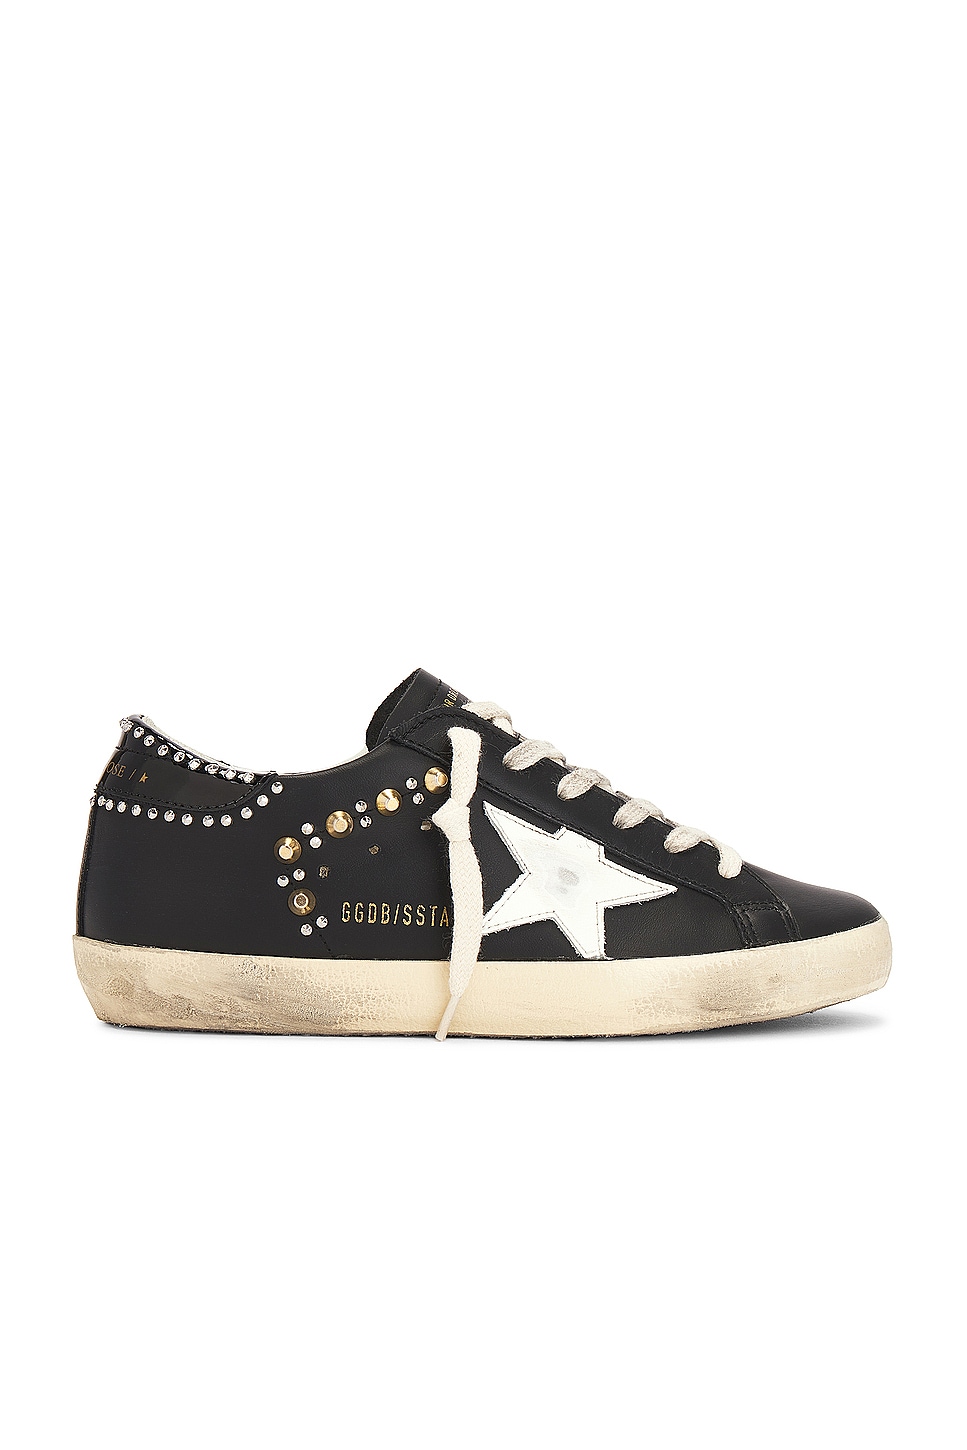 Image 1 of Golden Goose Super Star Leather Upper Sneaker in Black & White